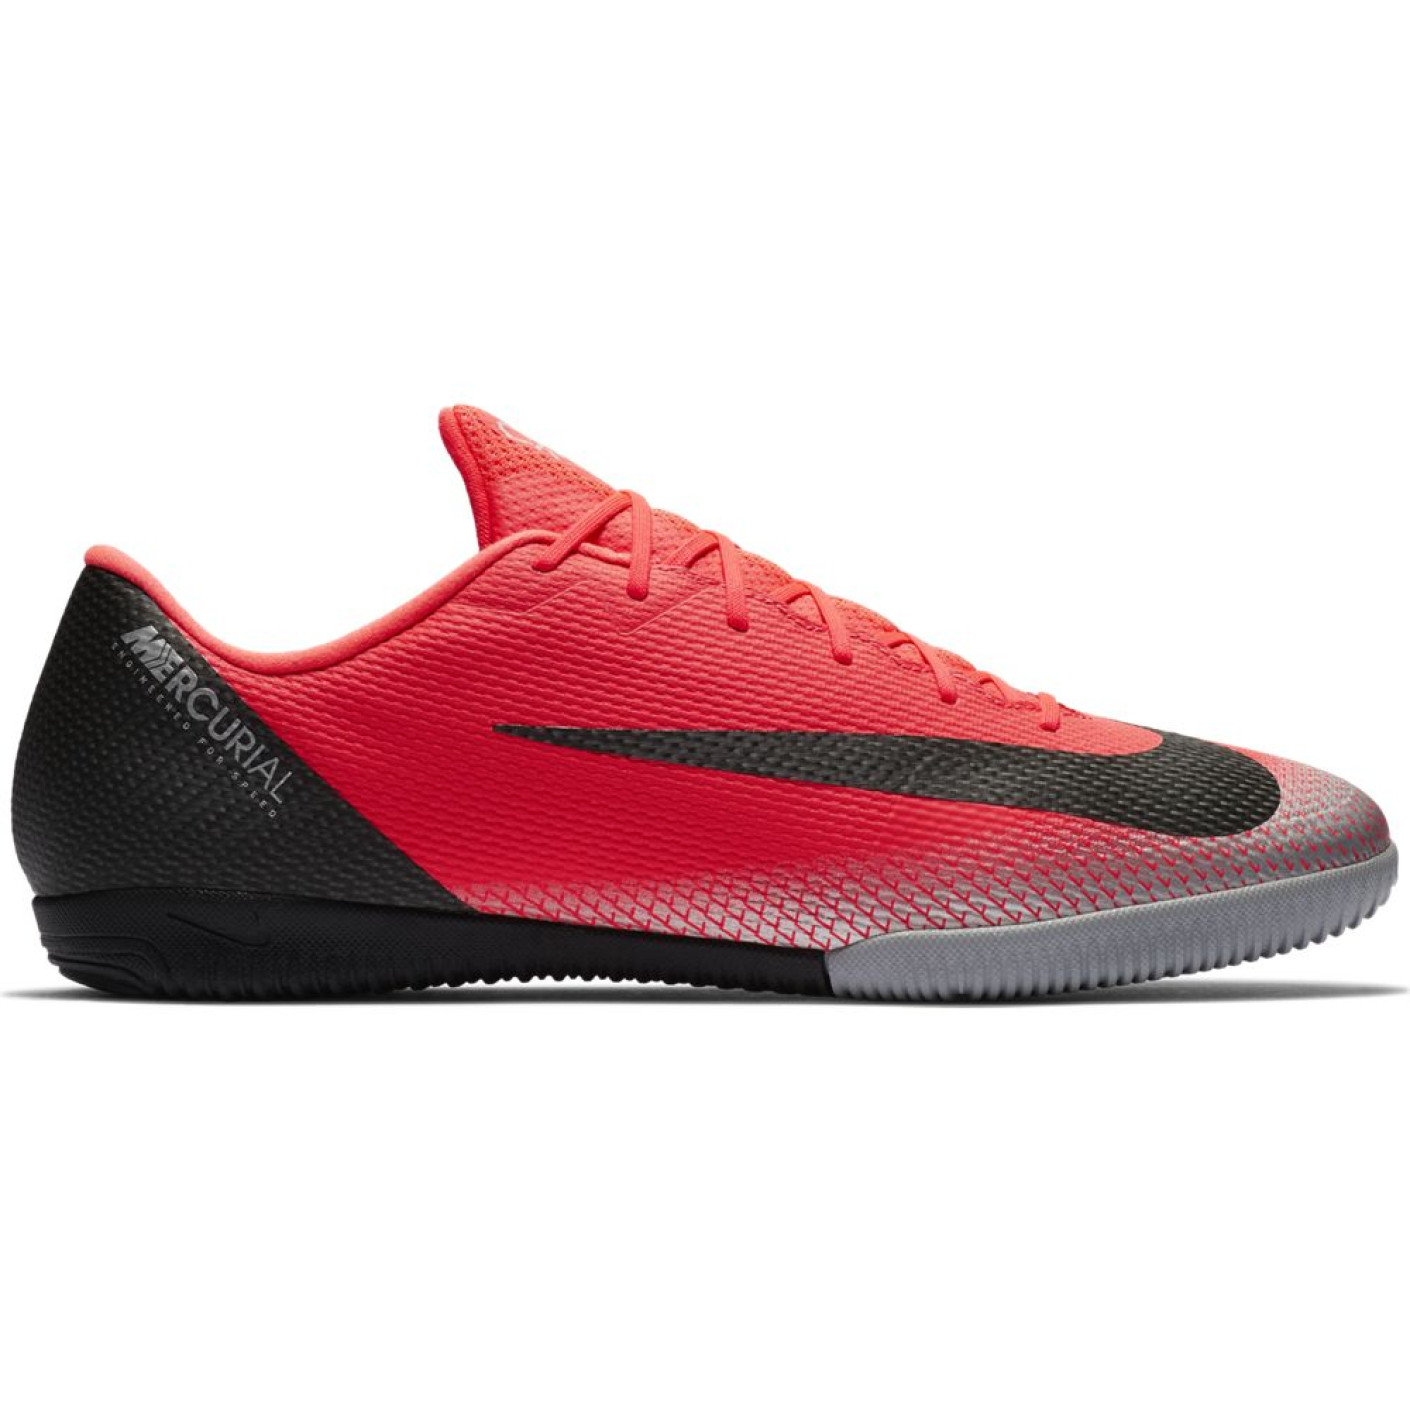 Nike Mercurial VAPOR 12 ACADEMY CR7 Indoor Bright Crimson